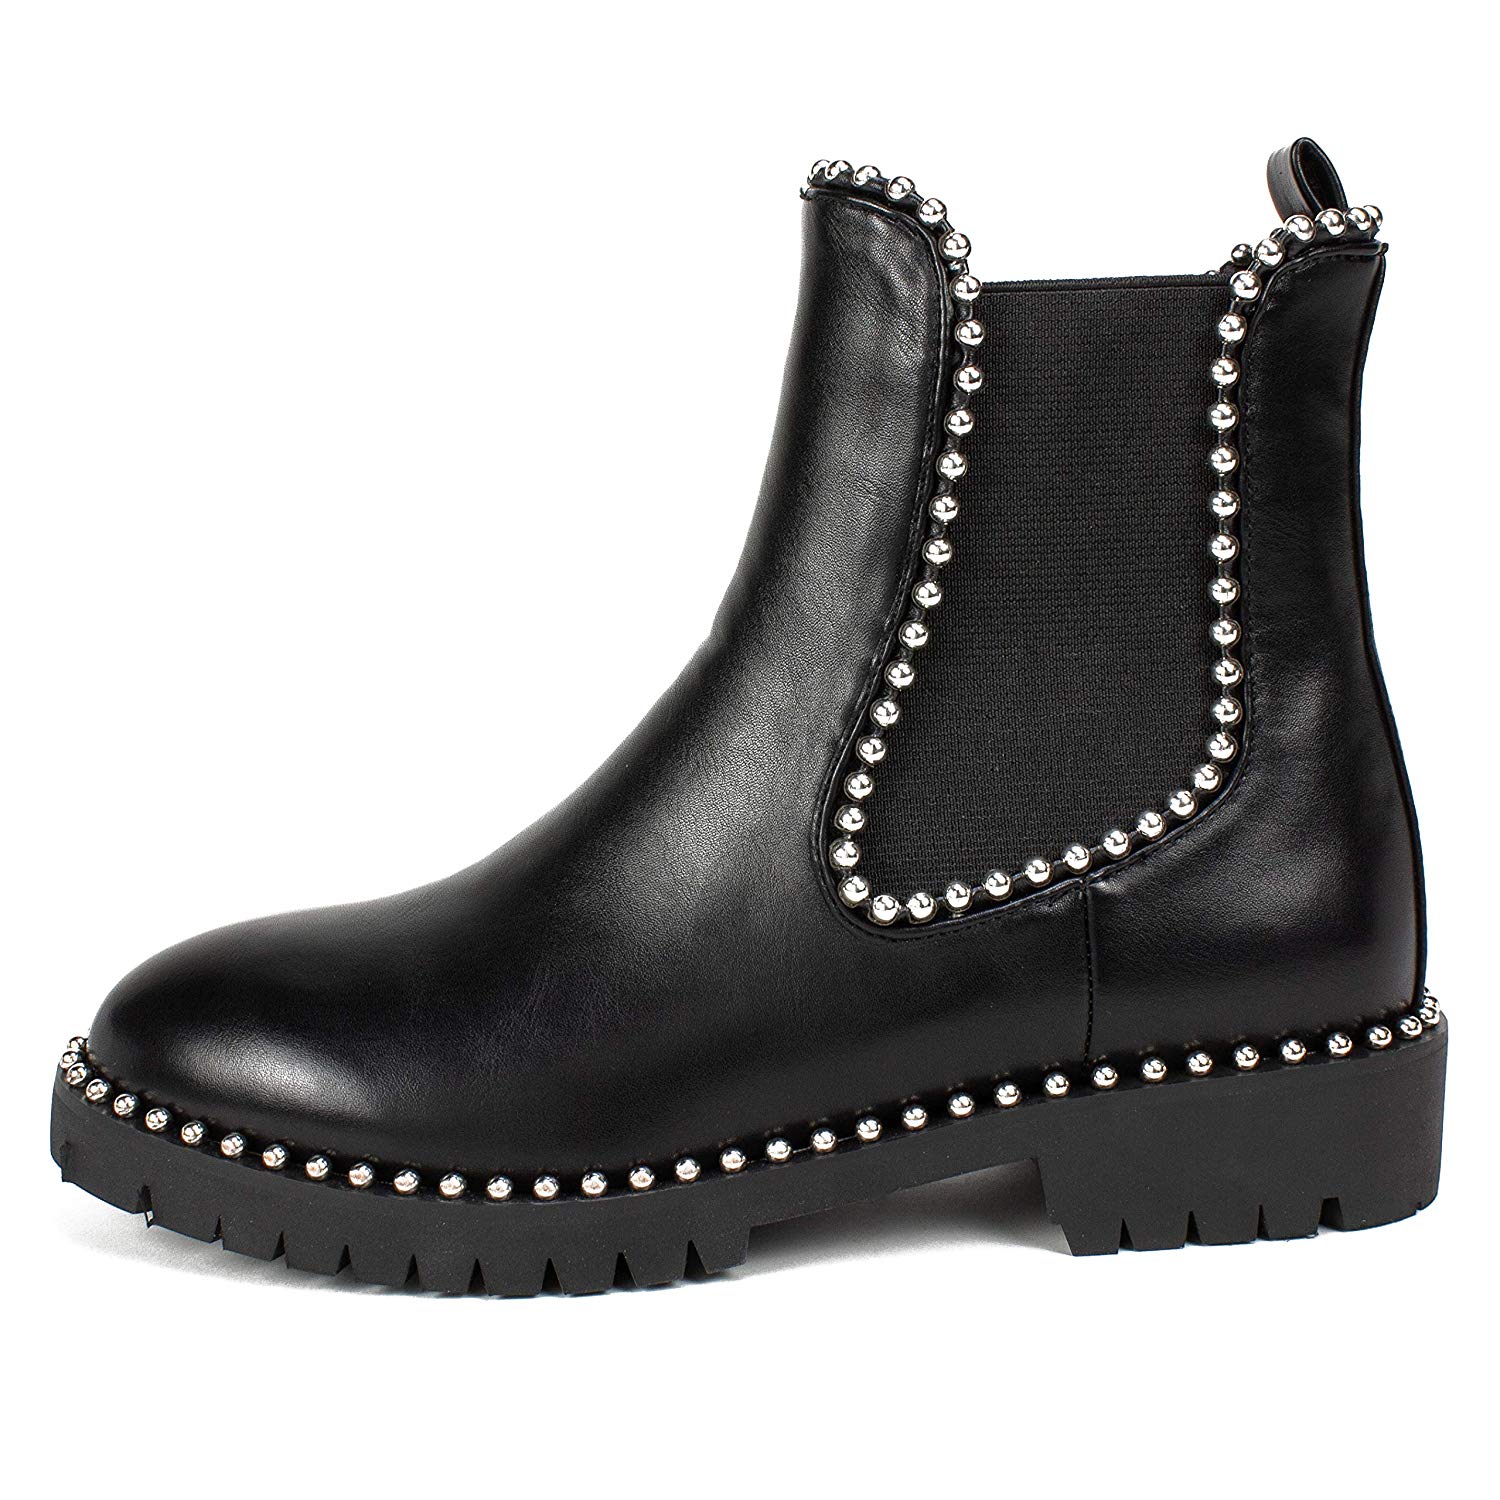 SEVEN DIALS Women's Shelley Chelsea Boot, Black, Size 8.5 JXa7 | eBay